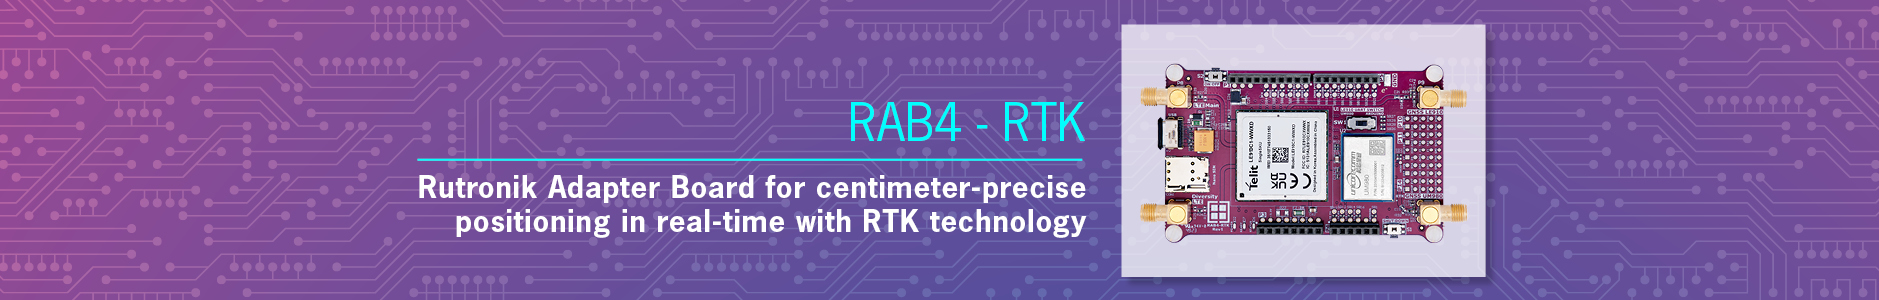 Rutronik Adapter Board - RAB4 for RTK